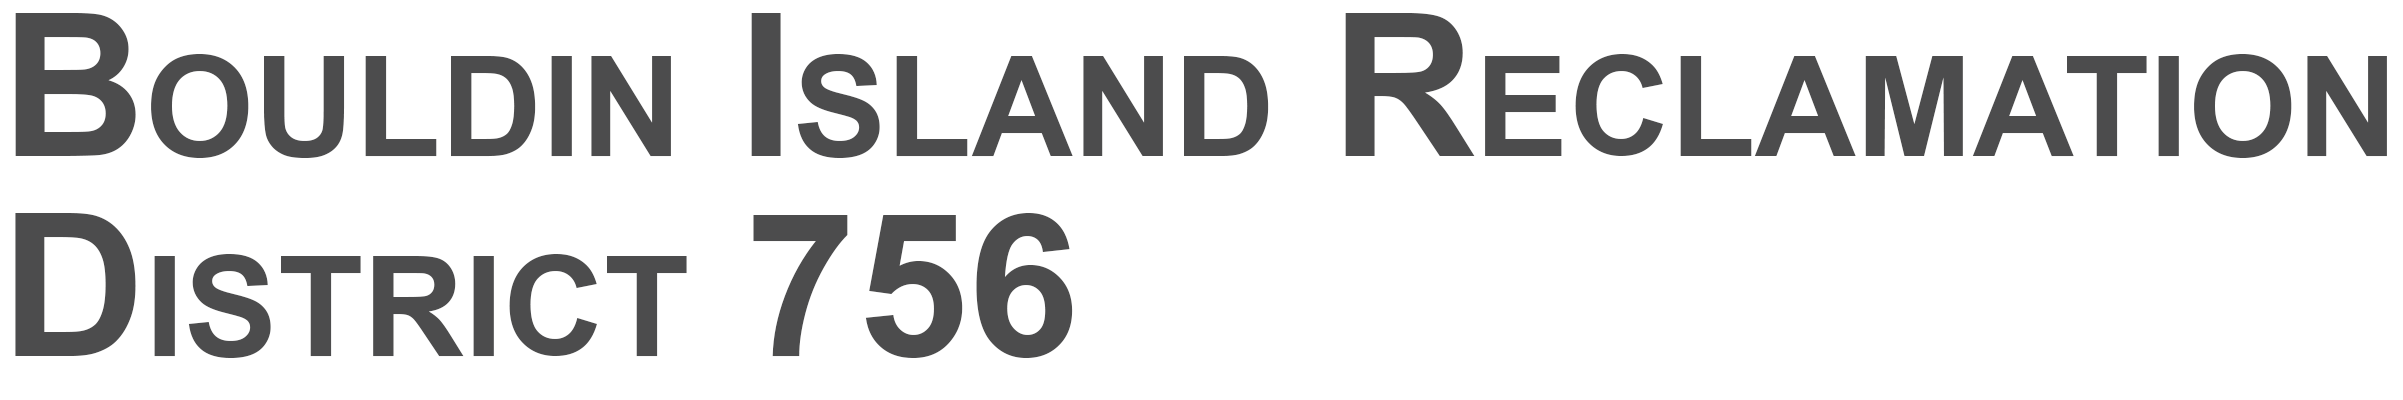 Bouldin Island Reclamation District 756 logo.